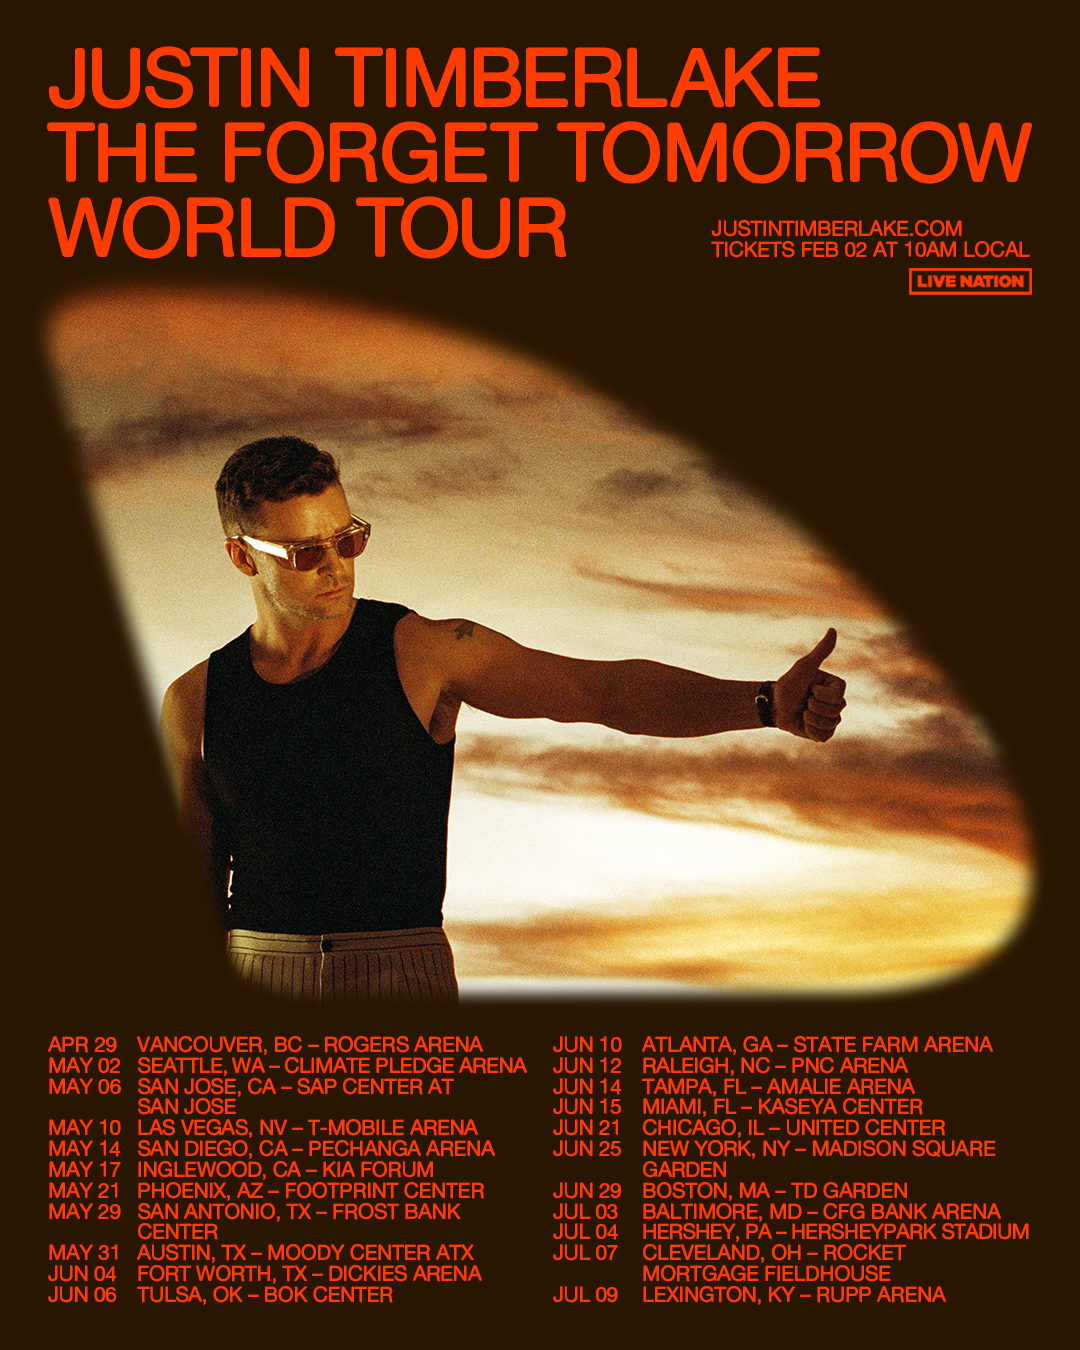 Billets Justin Timberlake - The Forget Tomorrow World Tour (BOK Center - Tulsa)